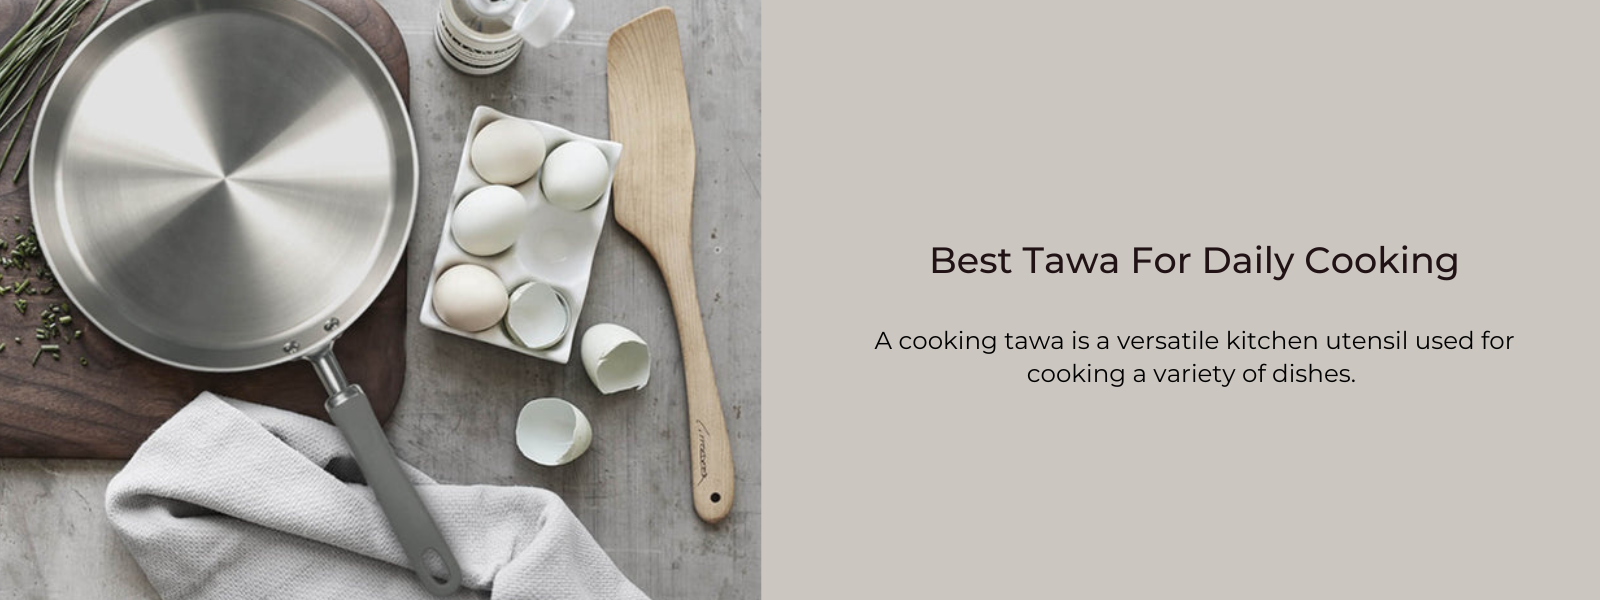 Tawa Roti Pan: A Versatile Tool For Indian Food - PotsandPans India